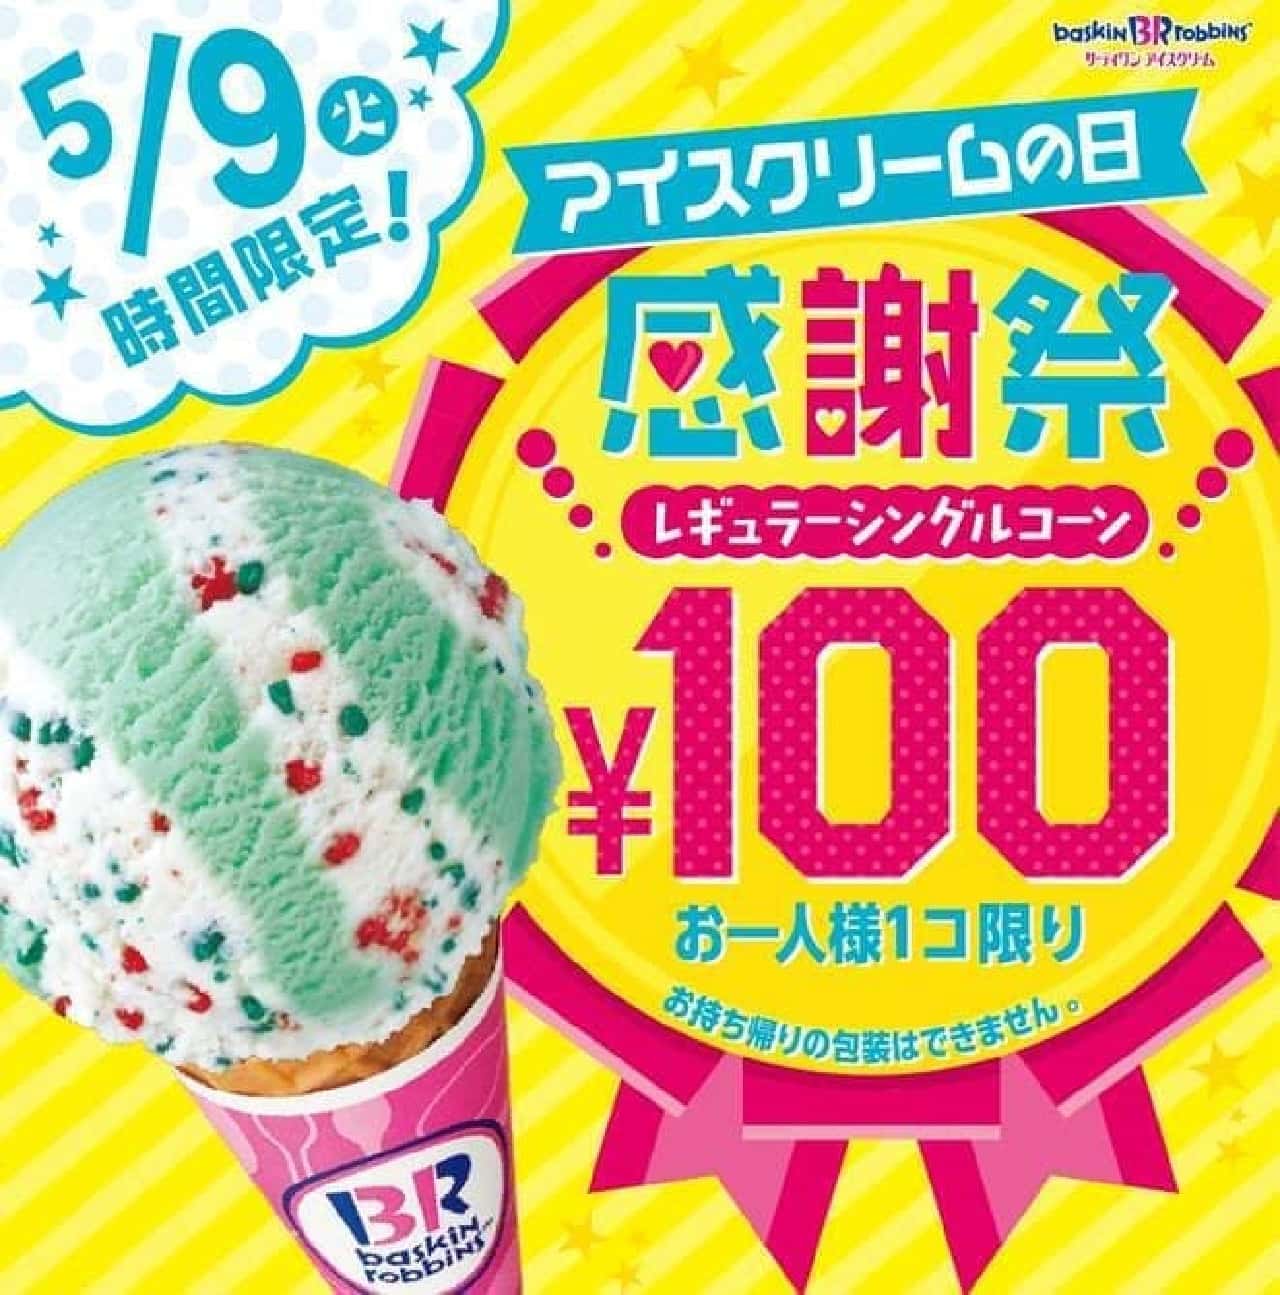 Thirty One 100 Yen Sale